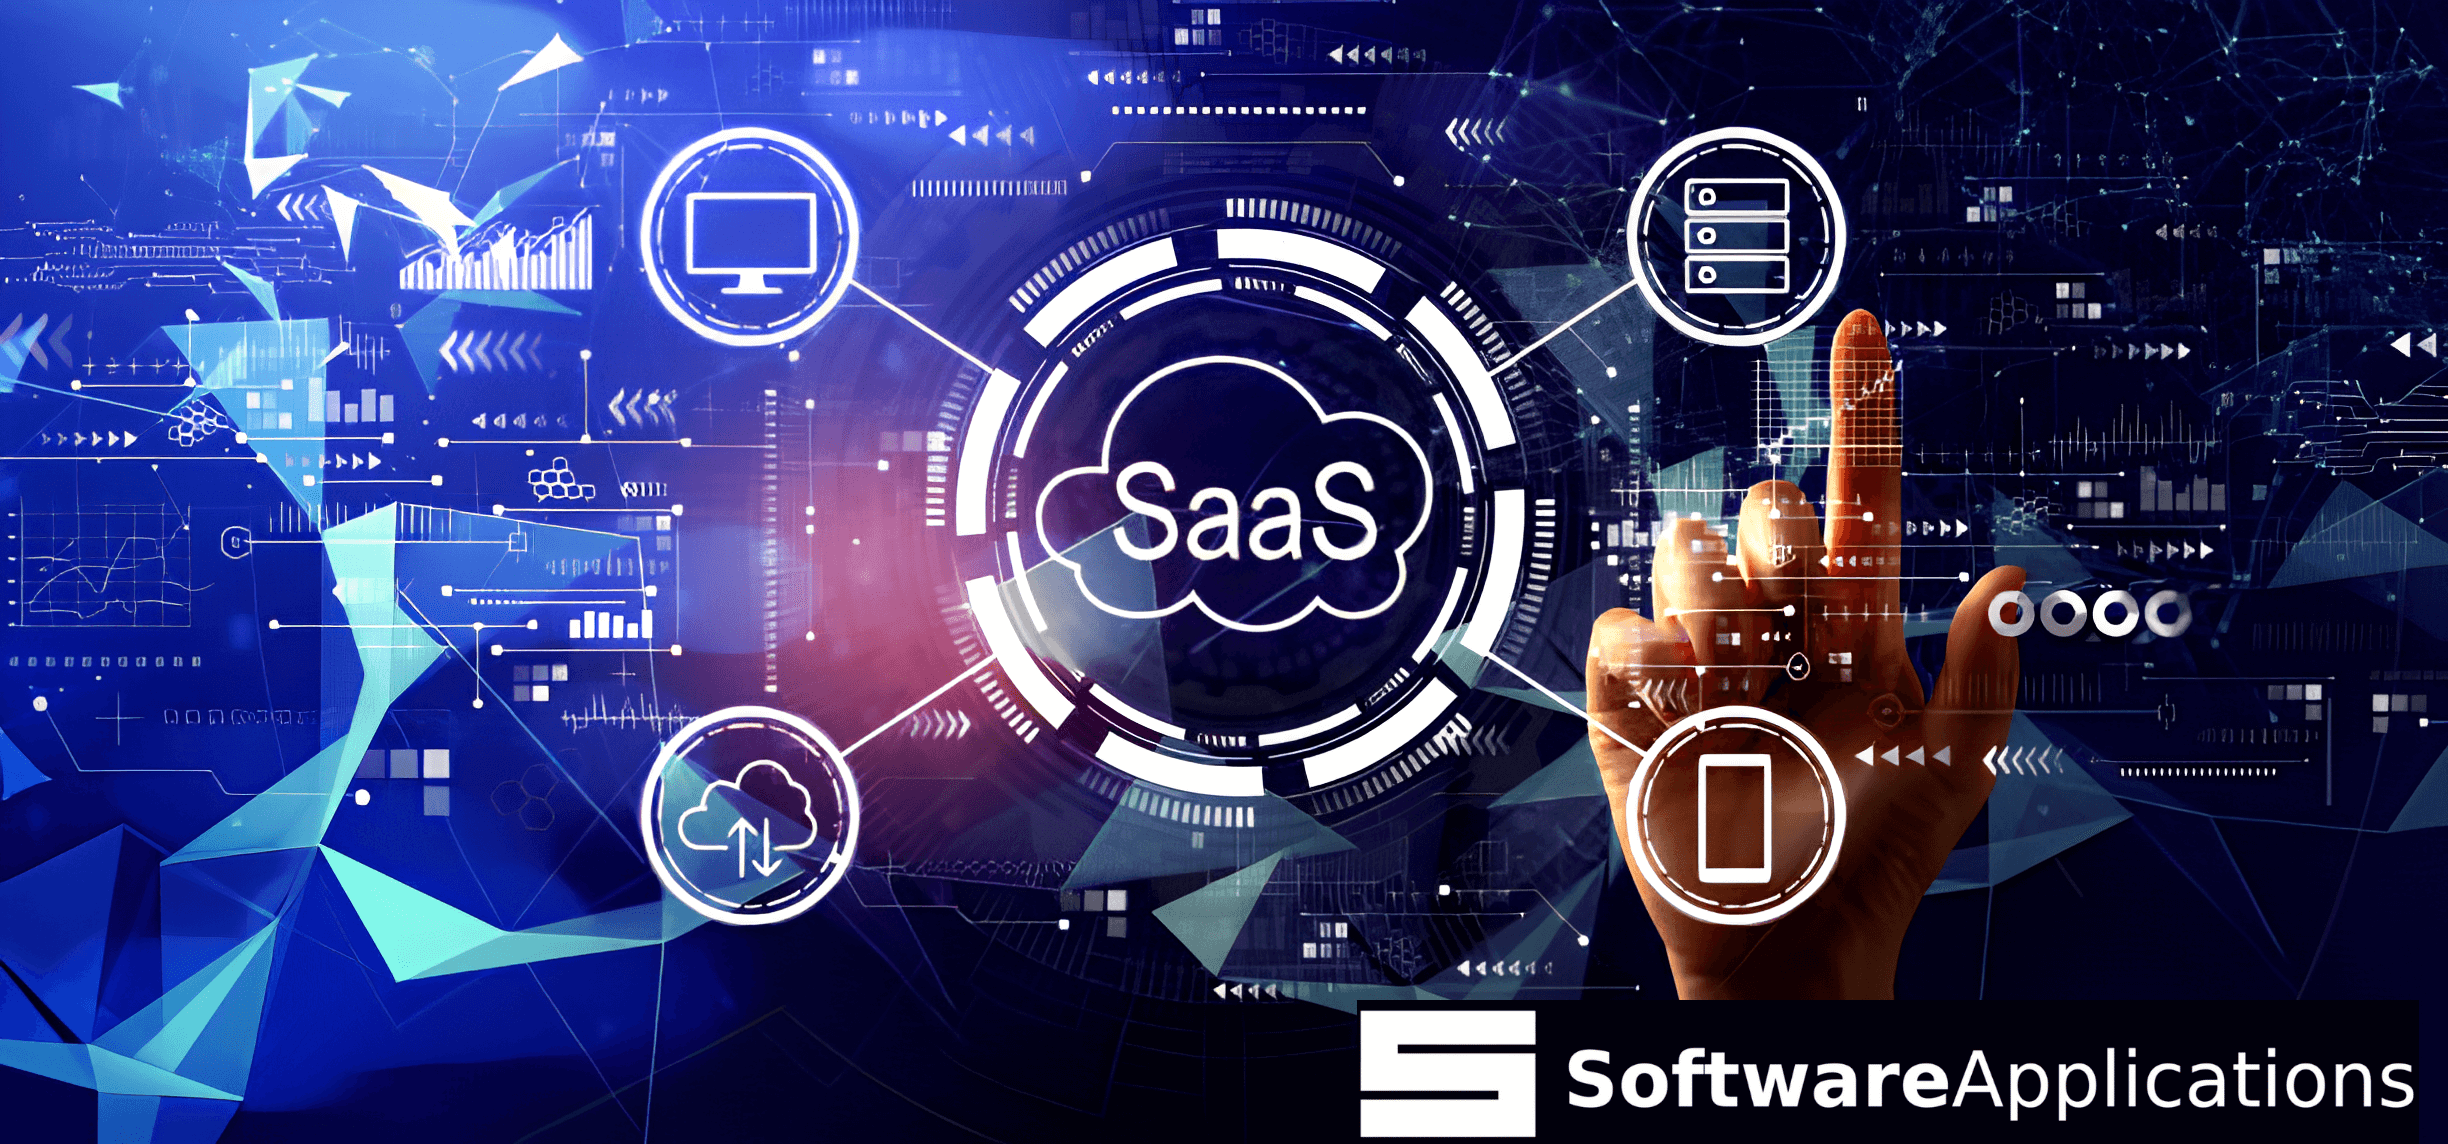 Softwareapplications.com is helping businesses explore software alternatives - SaaS, Web3, AI